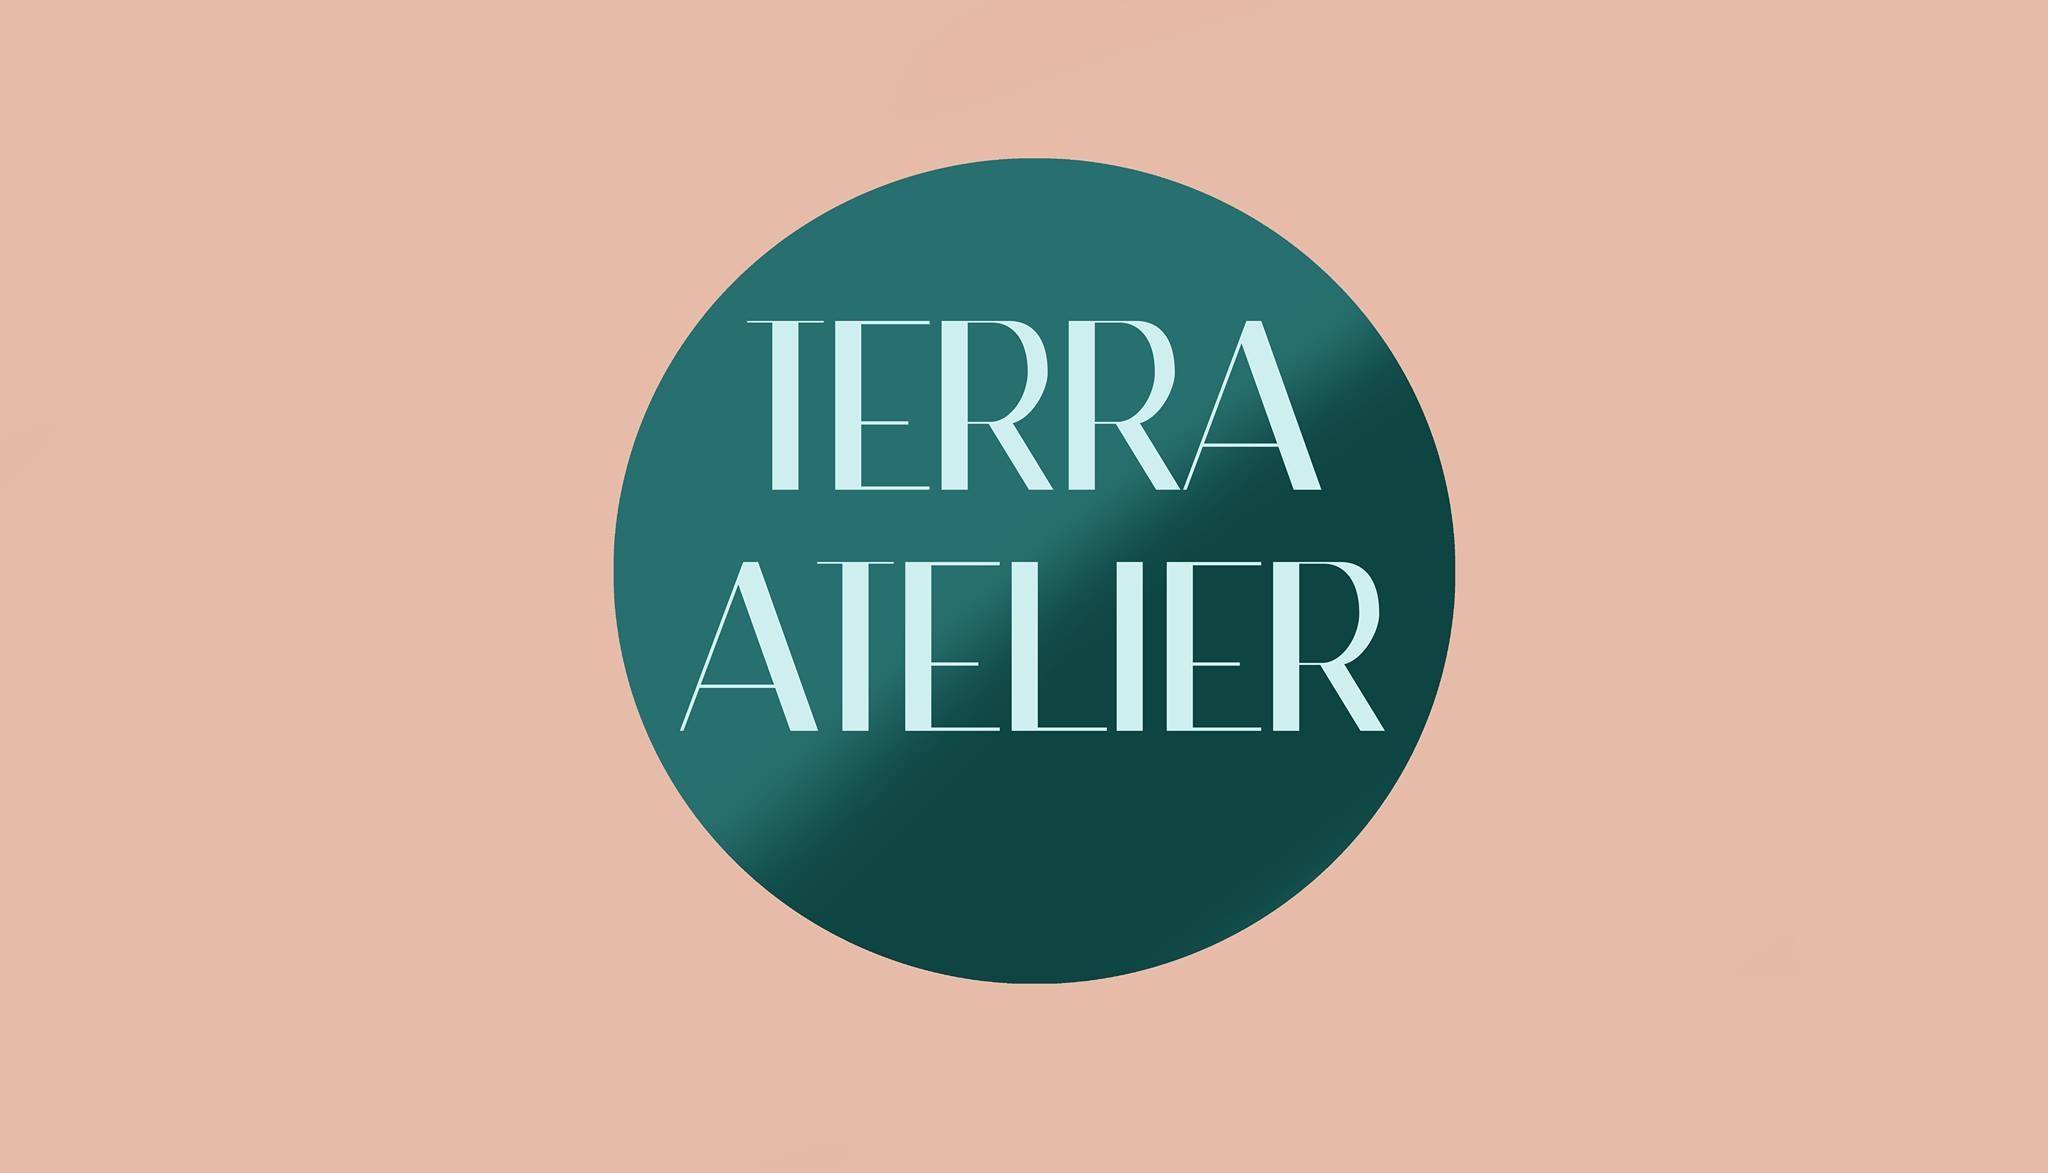 Terra Atelier Logo